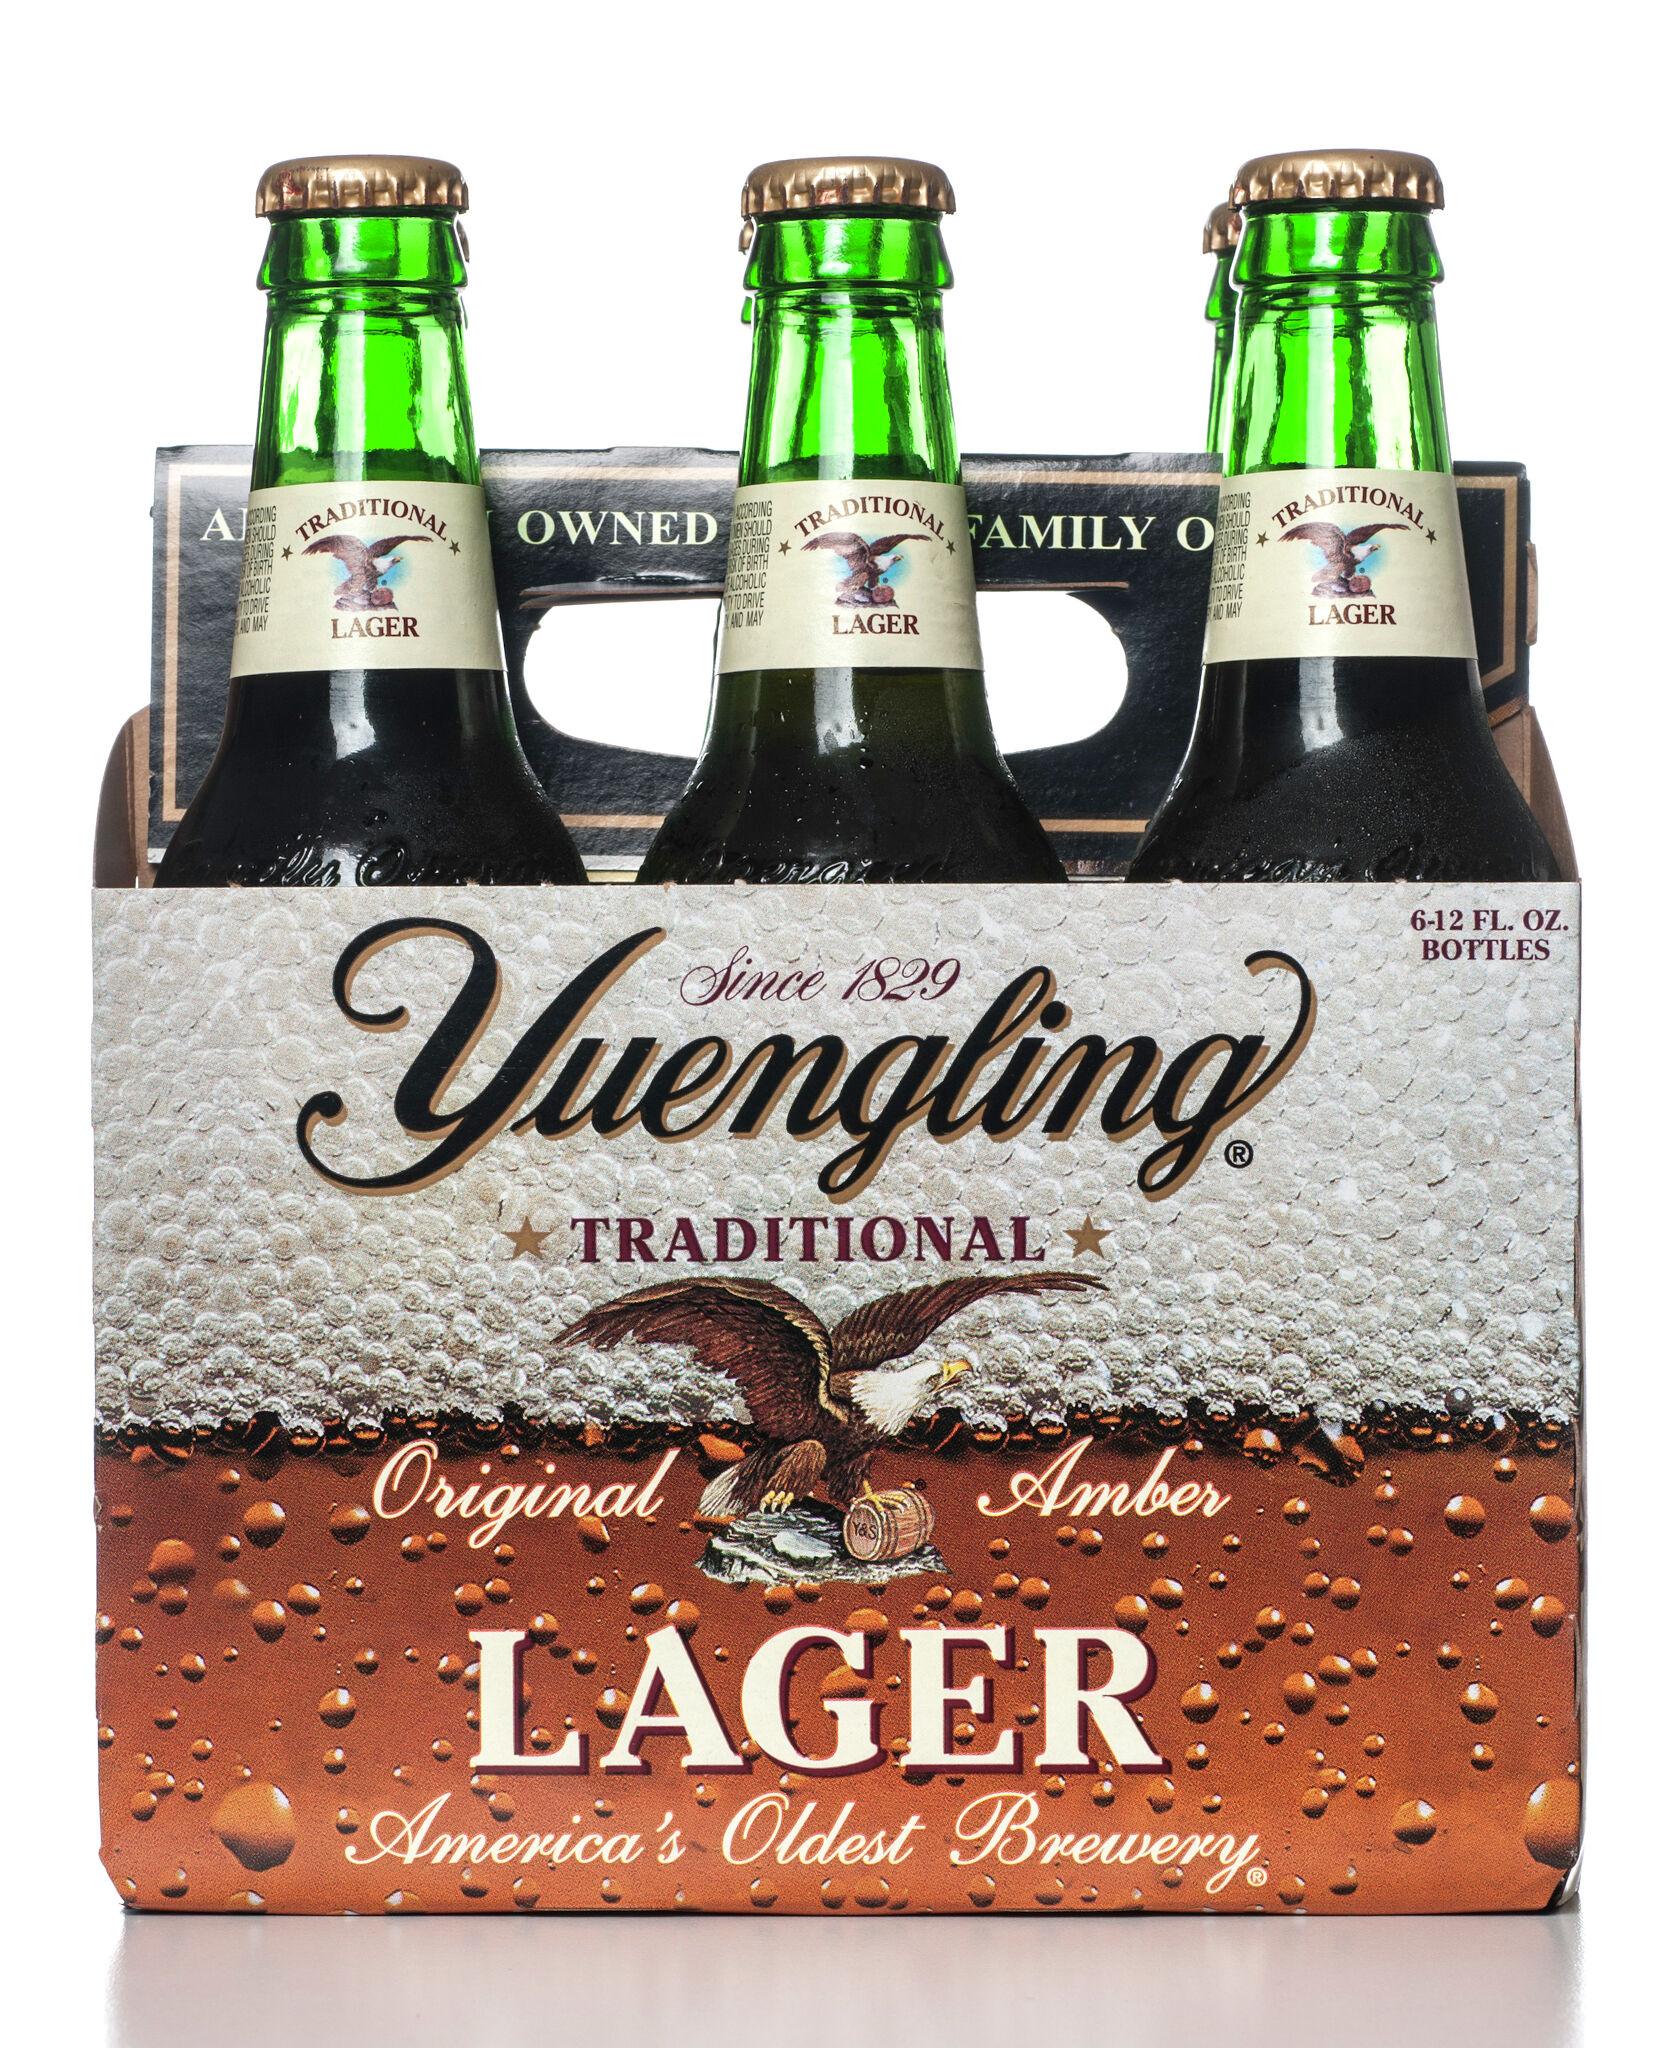 Yuengling Brewery expanding its popular beer brands to Missouri, Kansas